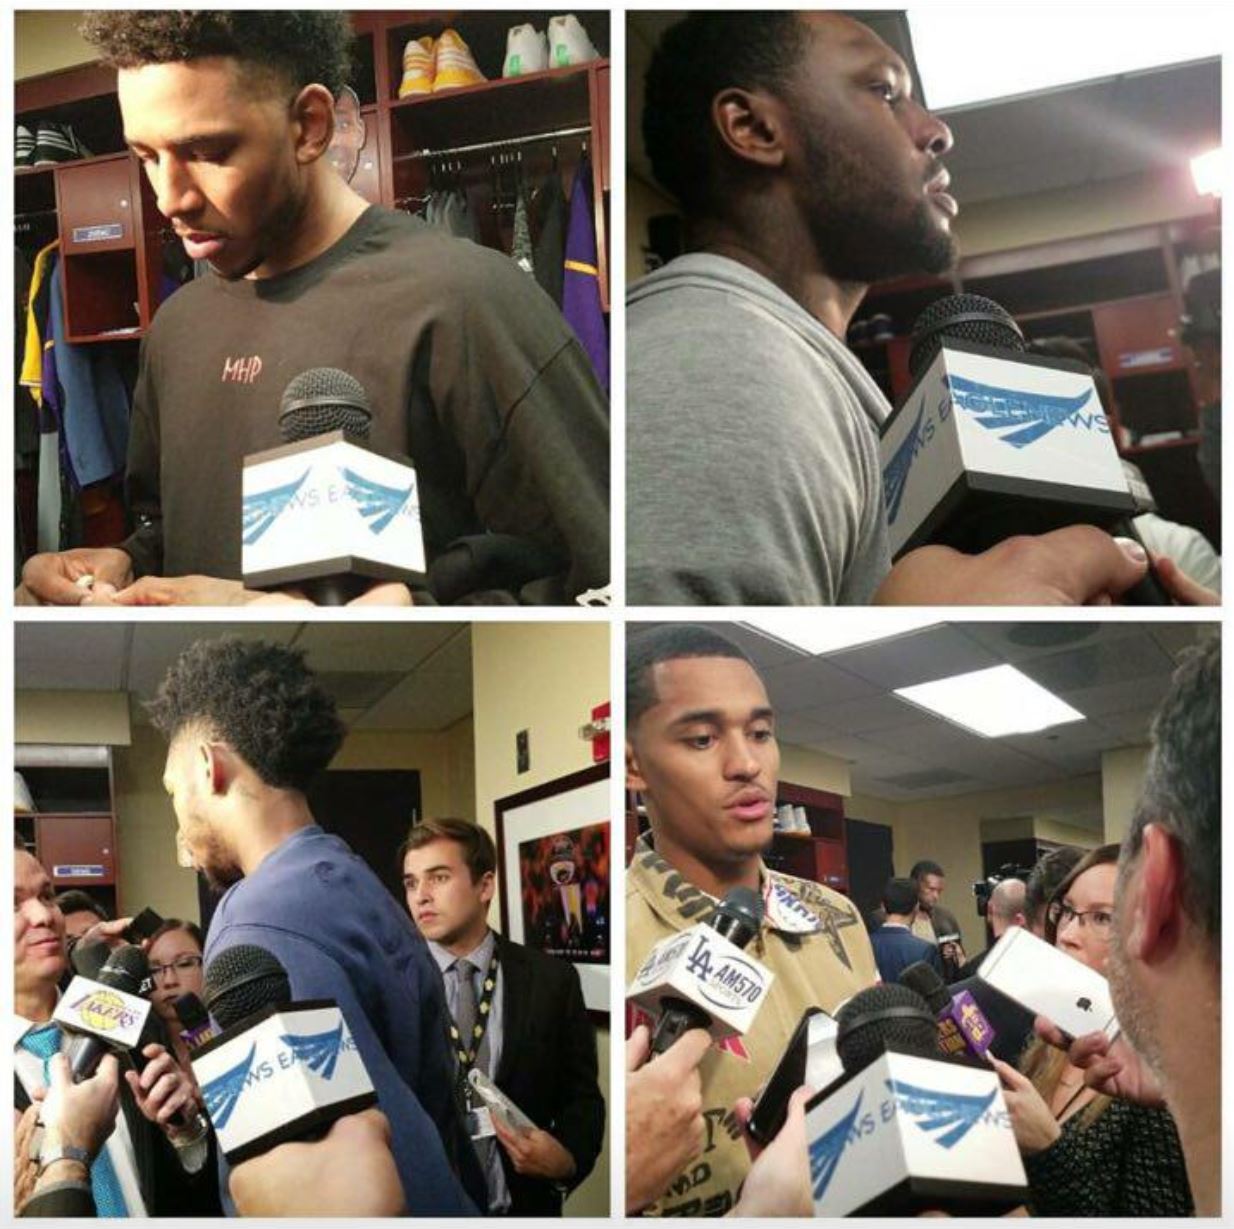 Eagle News US Bureau interviews members of the LA Lakers' team.